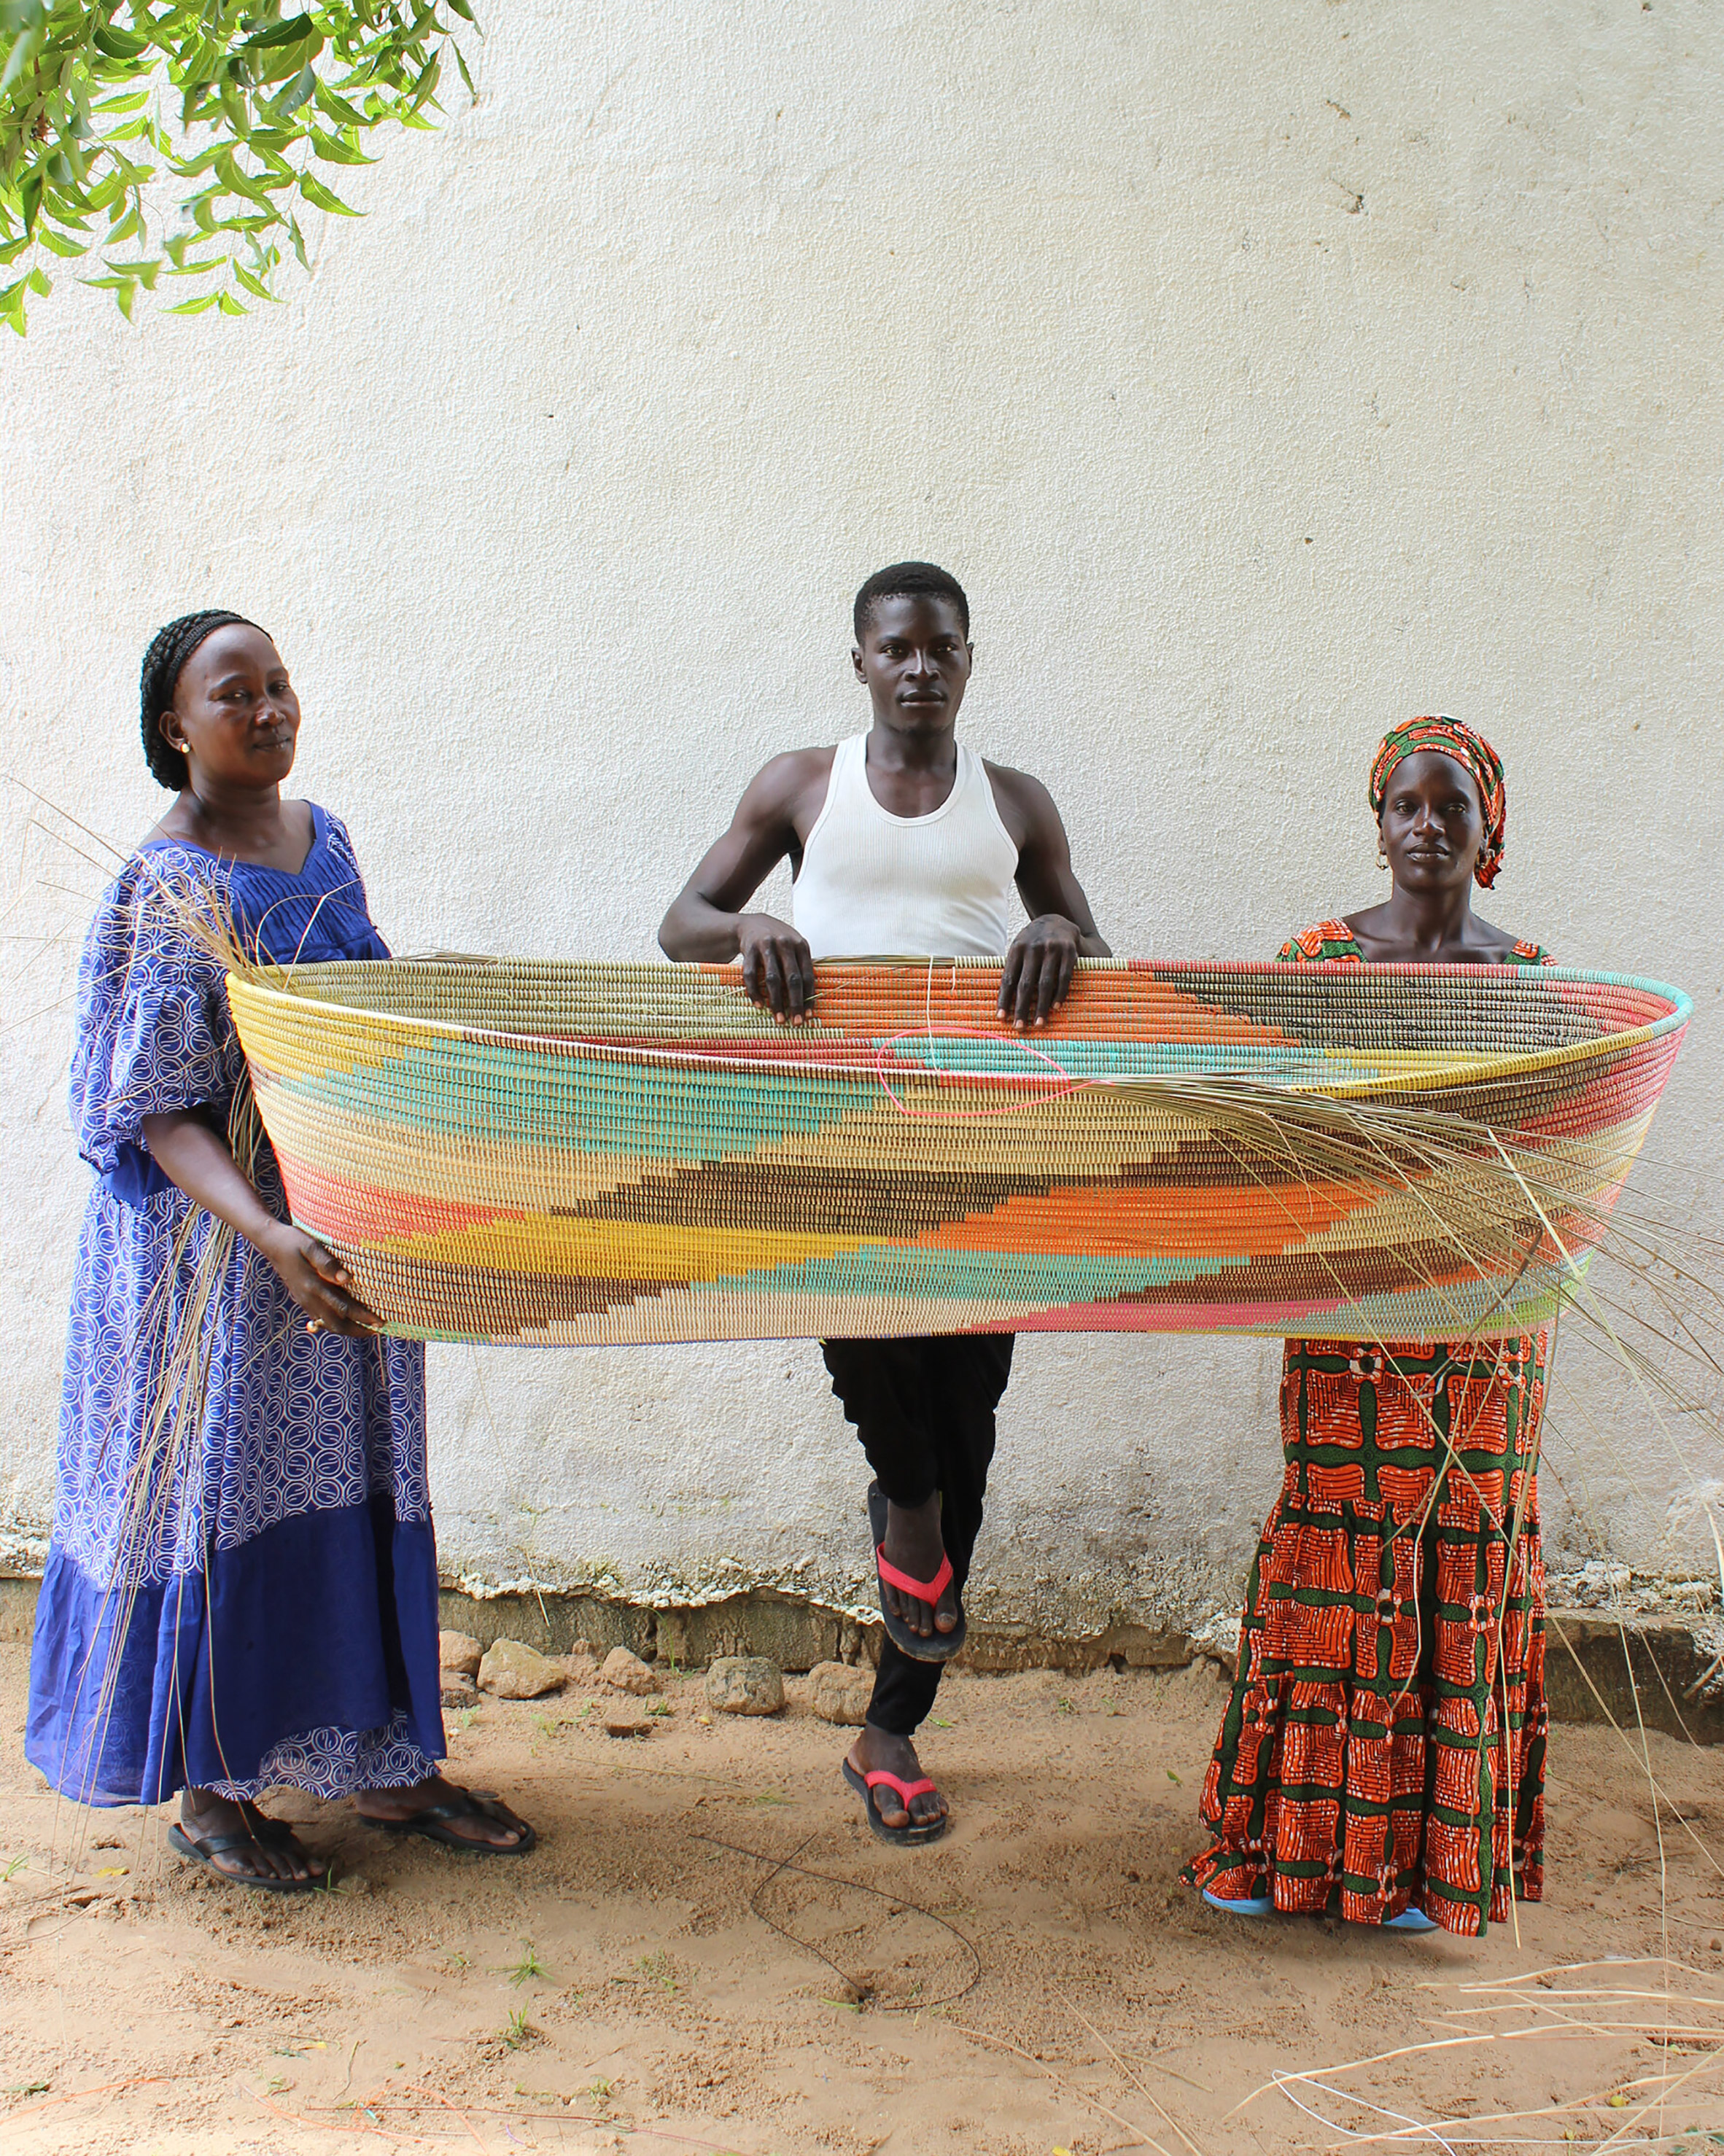 Stephen Burks Man Made basket weaving in Senegal